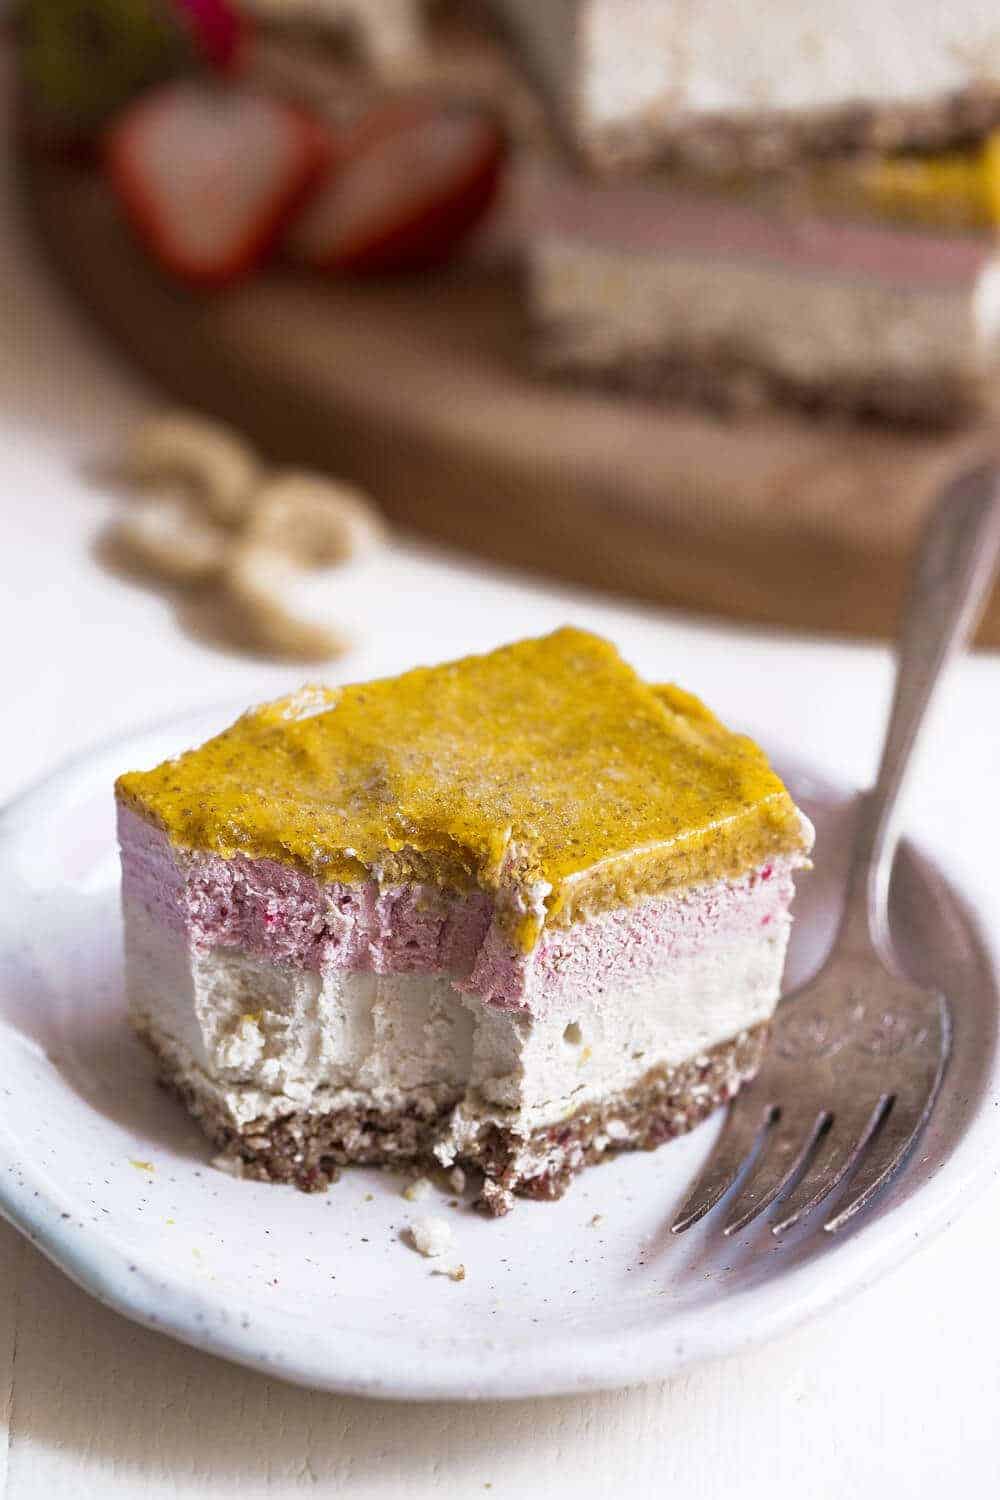 Strawberry & mango cheesecake bars with a granola crust